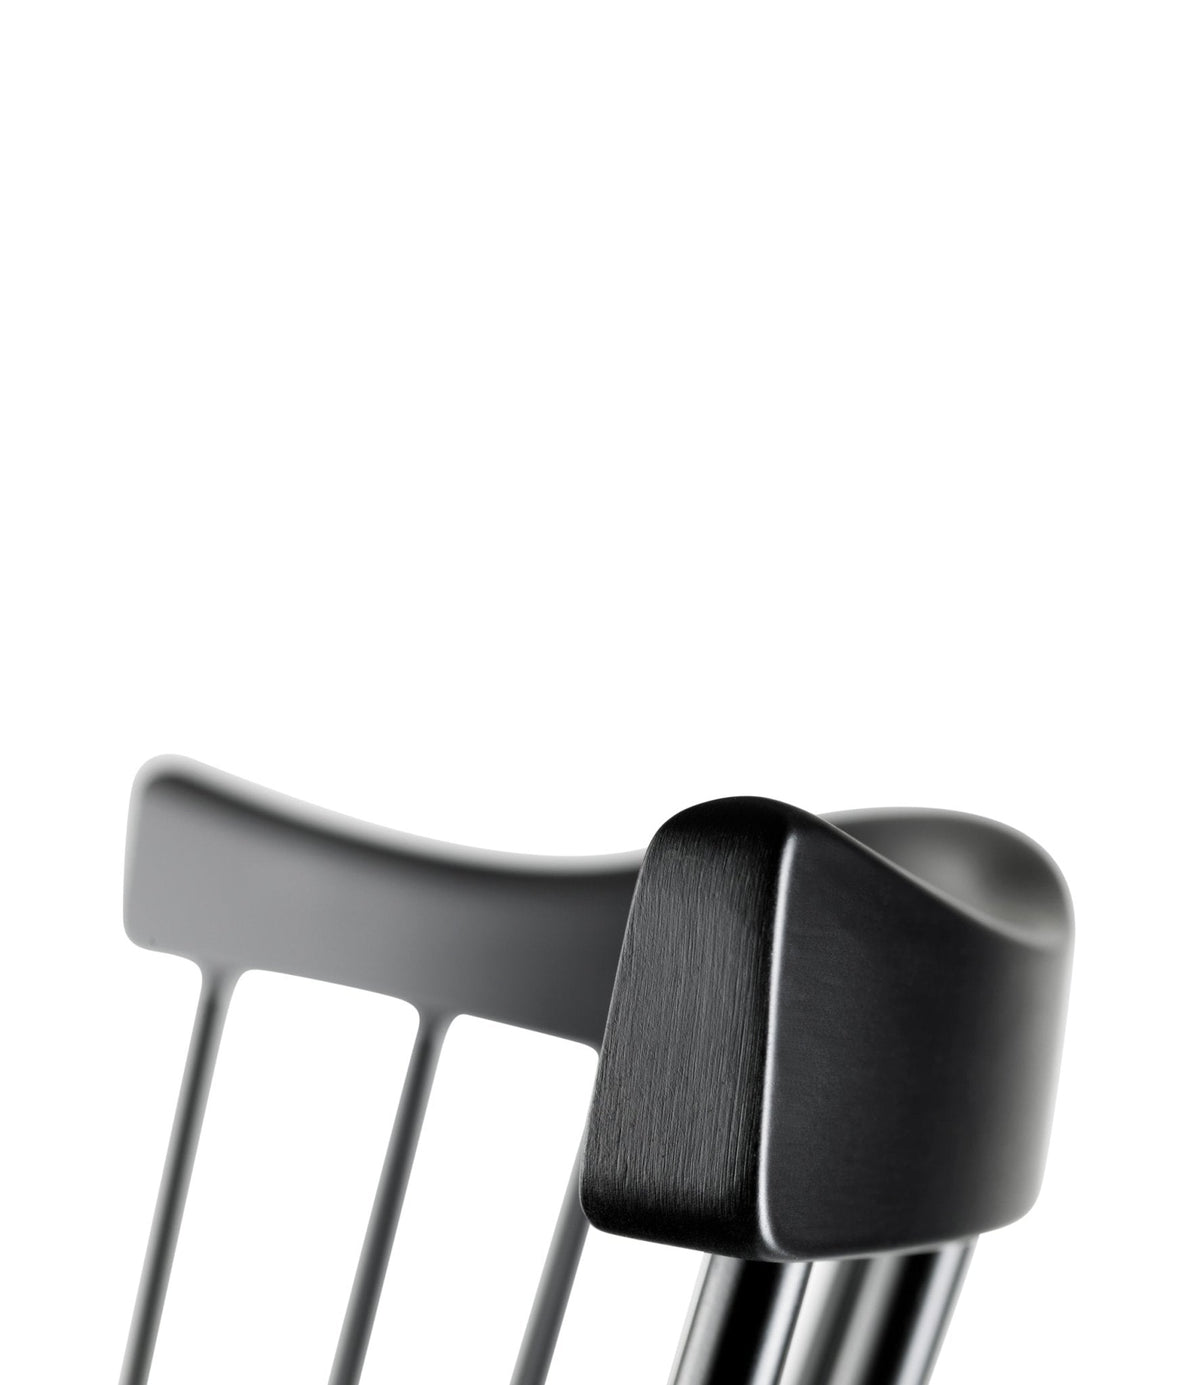 FDB Møbler J52B tuoli musta - Laatukaluste